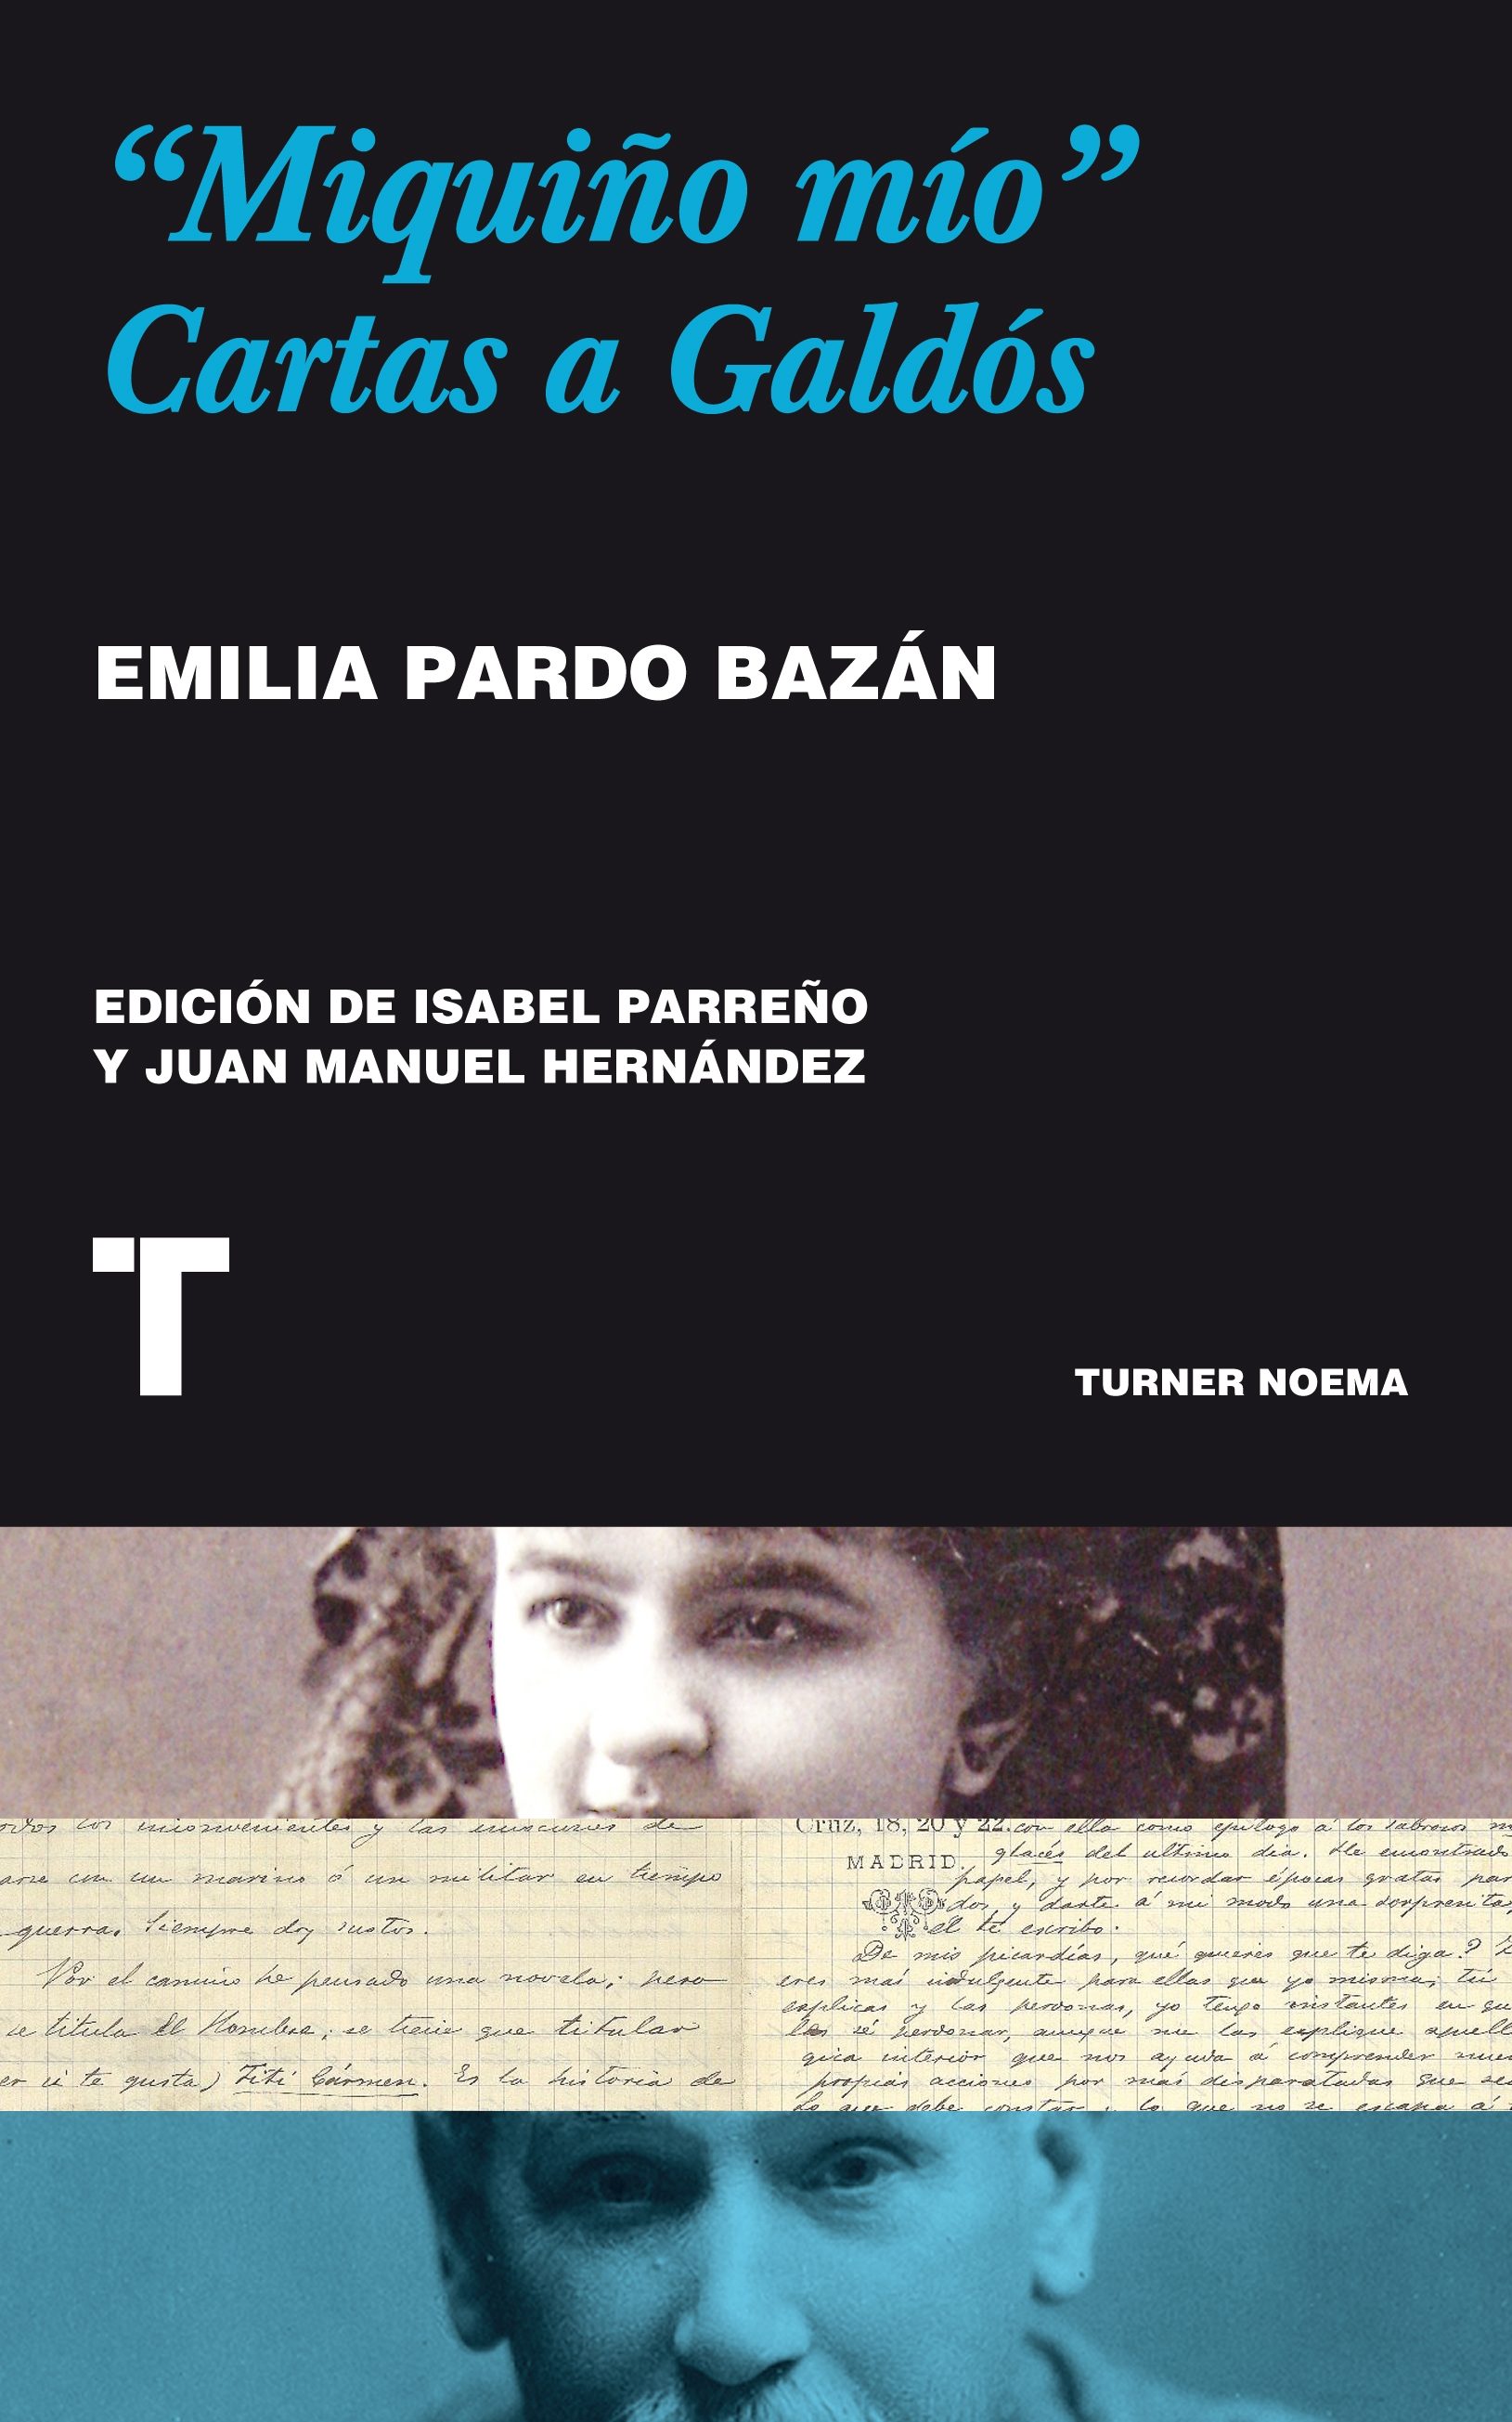 Miquiño mío, el libro de cartas de Emilia Pardo Bazán a Benito Pérez Galdós